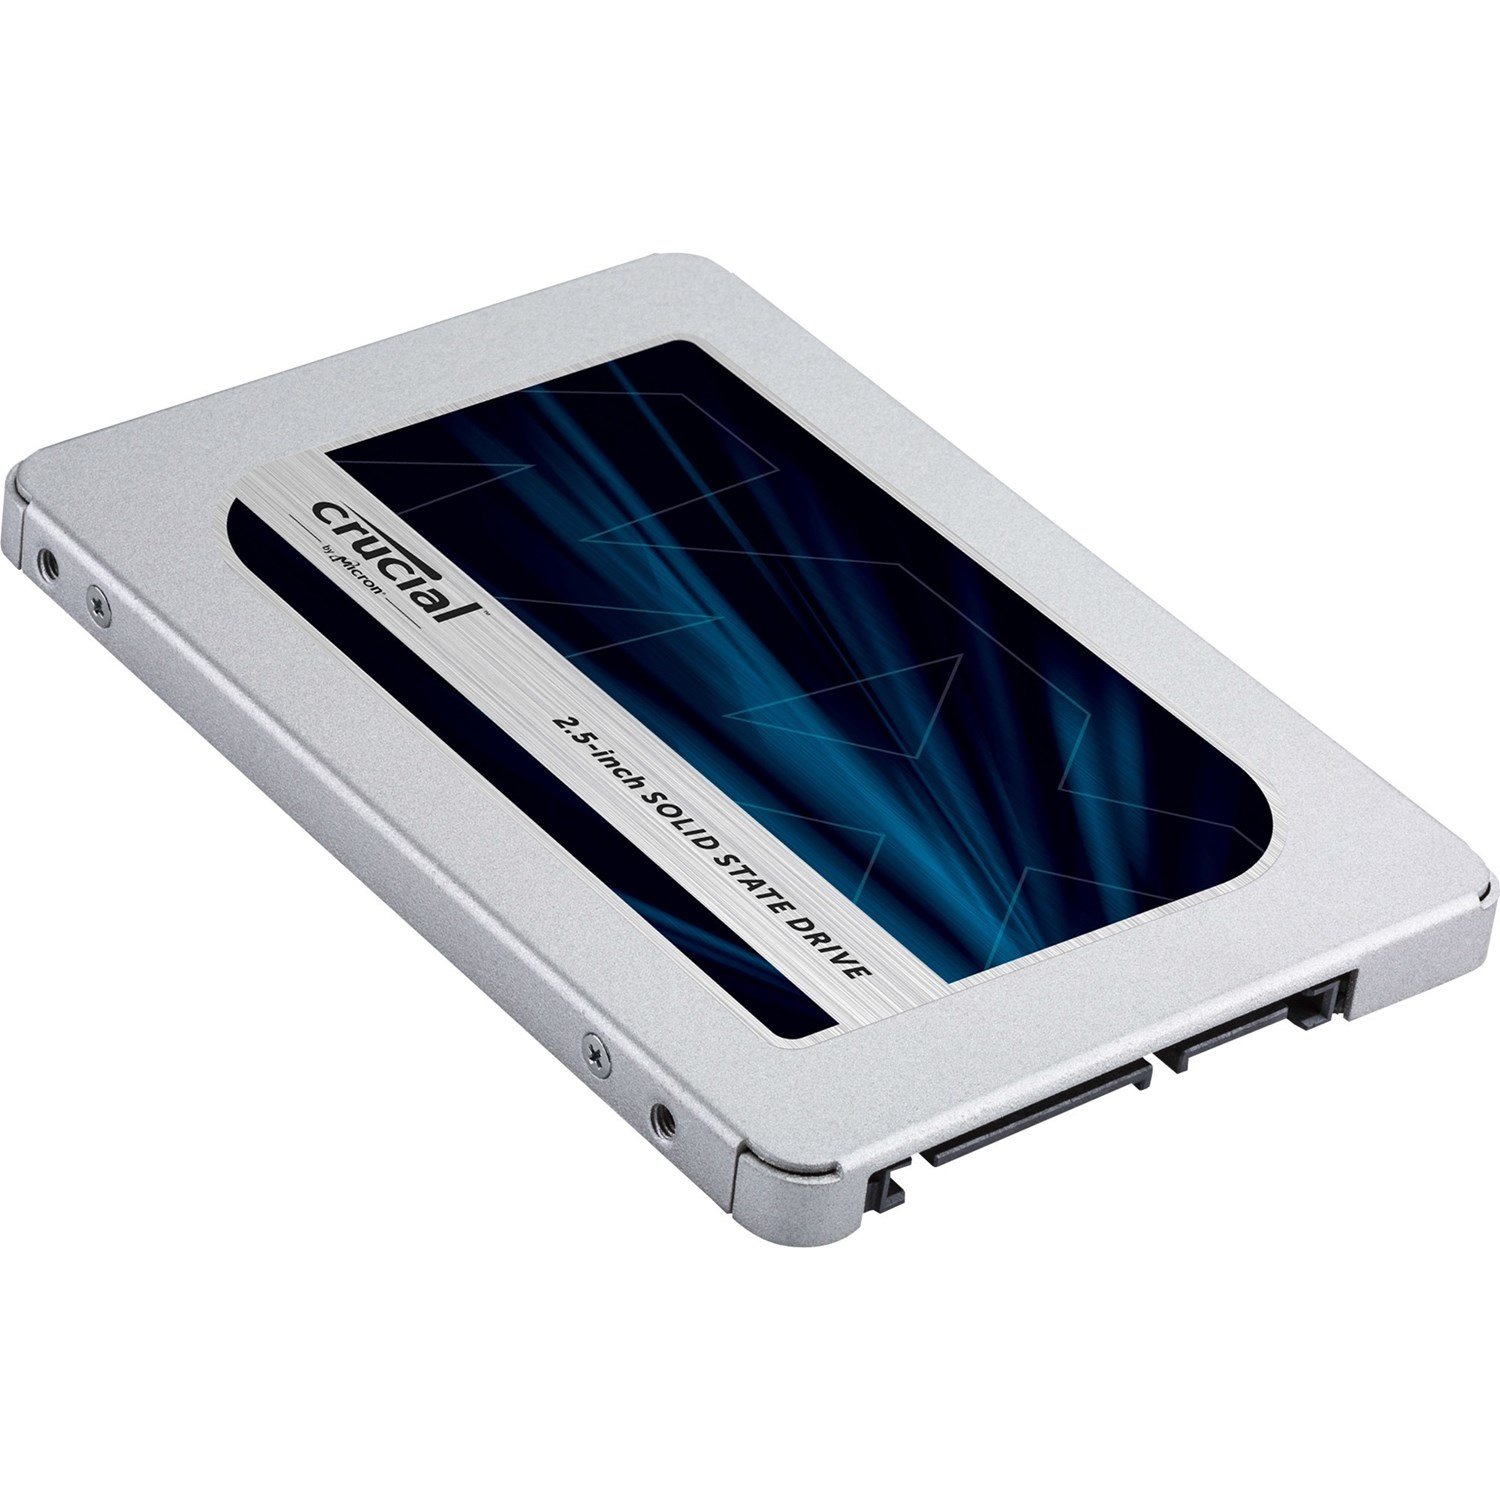 Crucial MX500 250GB 2.5' Sata SSD - 3D TLC 560/510 MB/s 90/95K Iops Acronis True Image Cloning Softwae 5YR WTY 7MM W/9.5MM Adapter